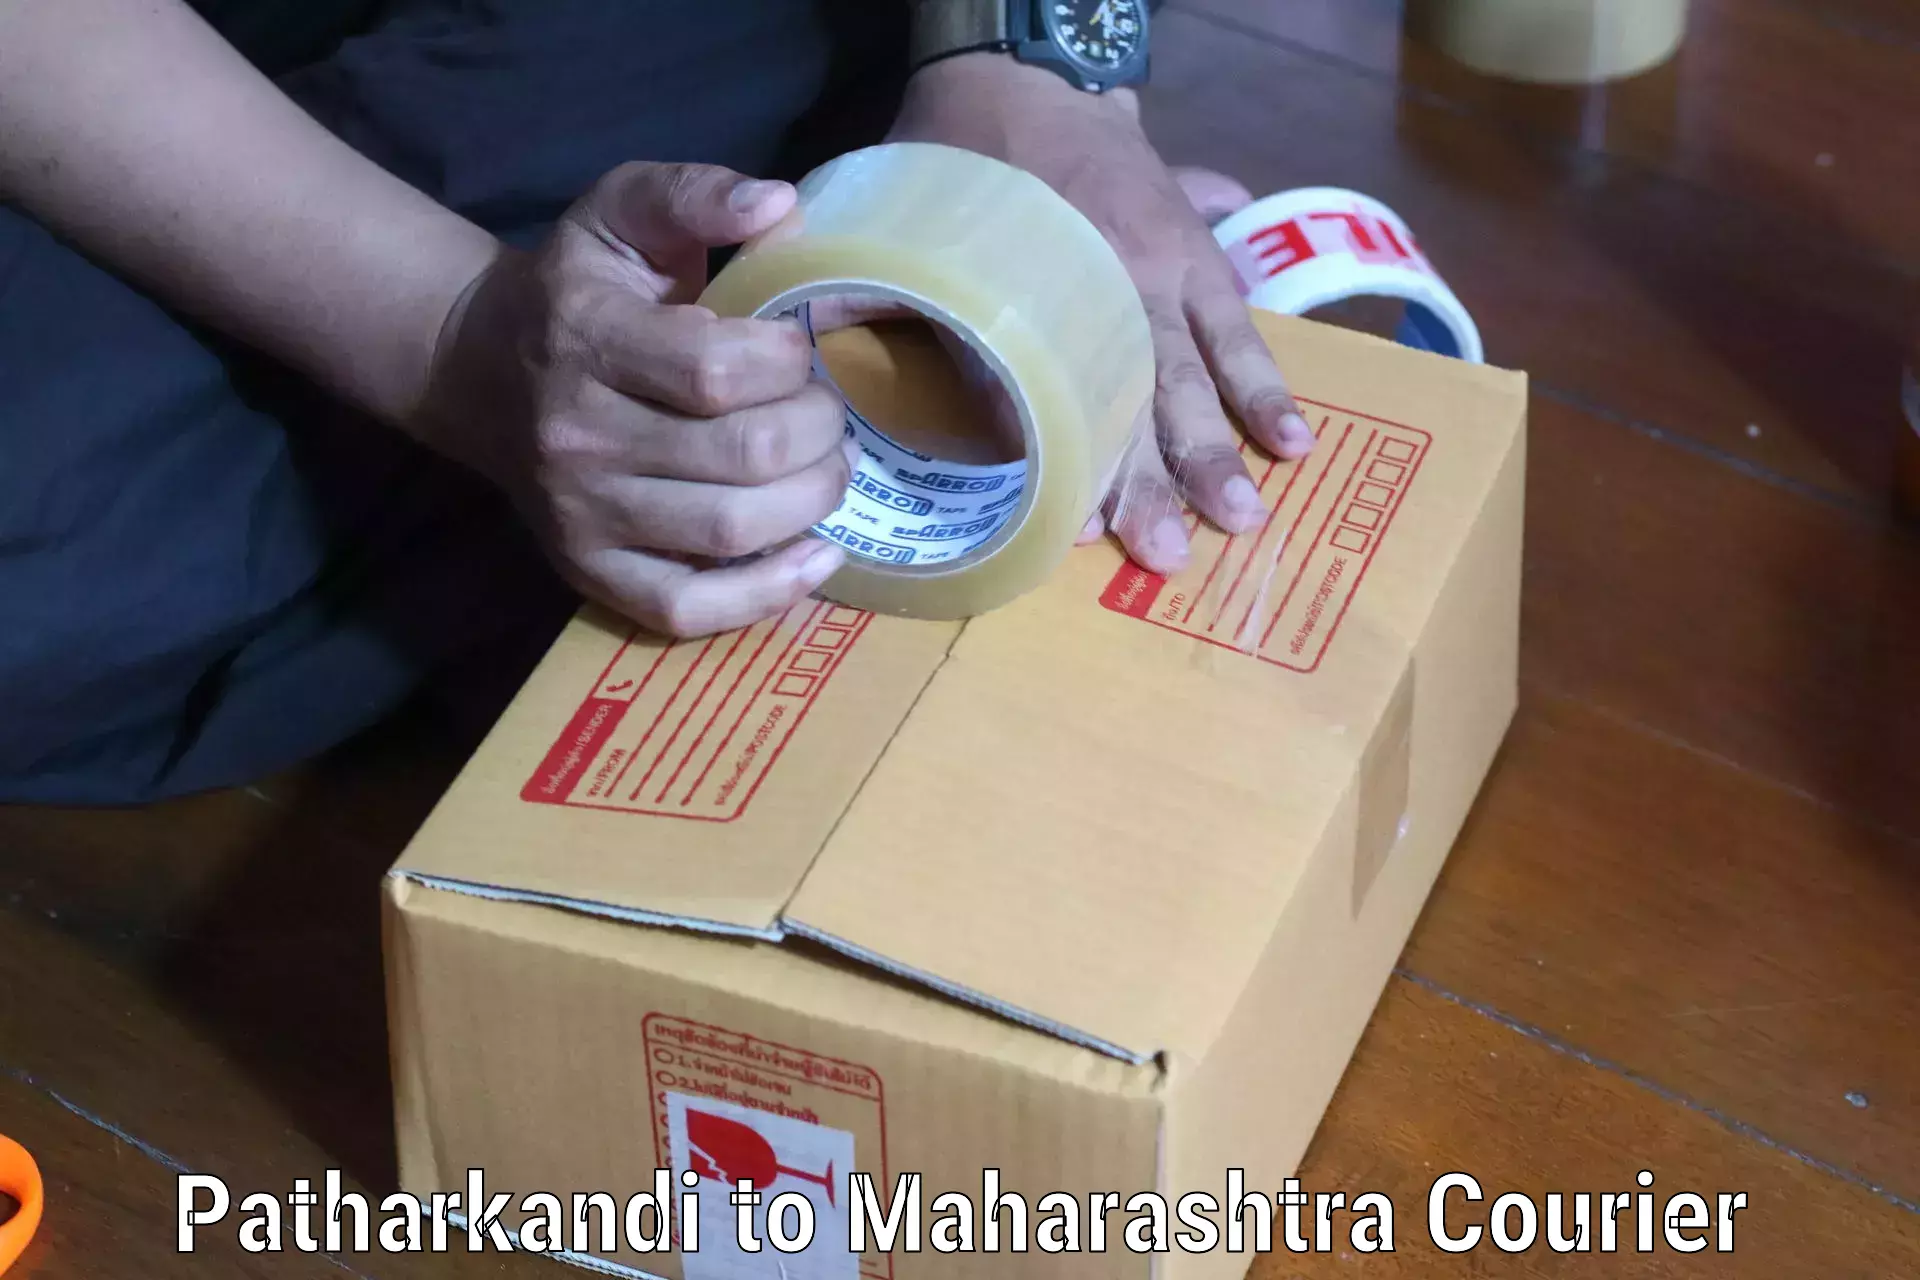 Courier service innovation Patharkandi to Sakri